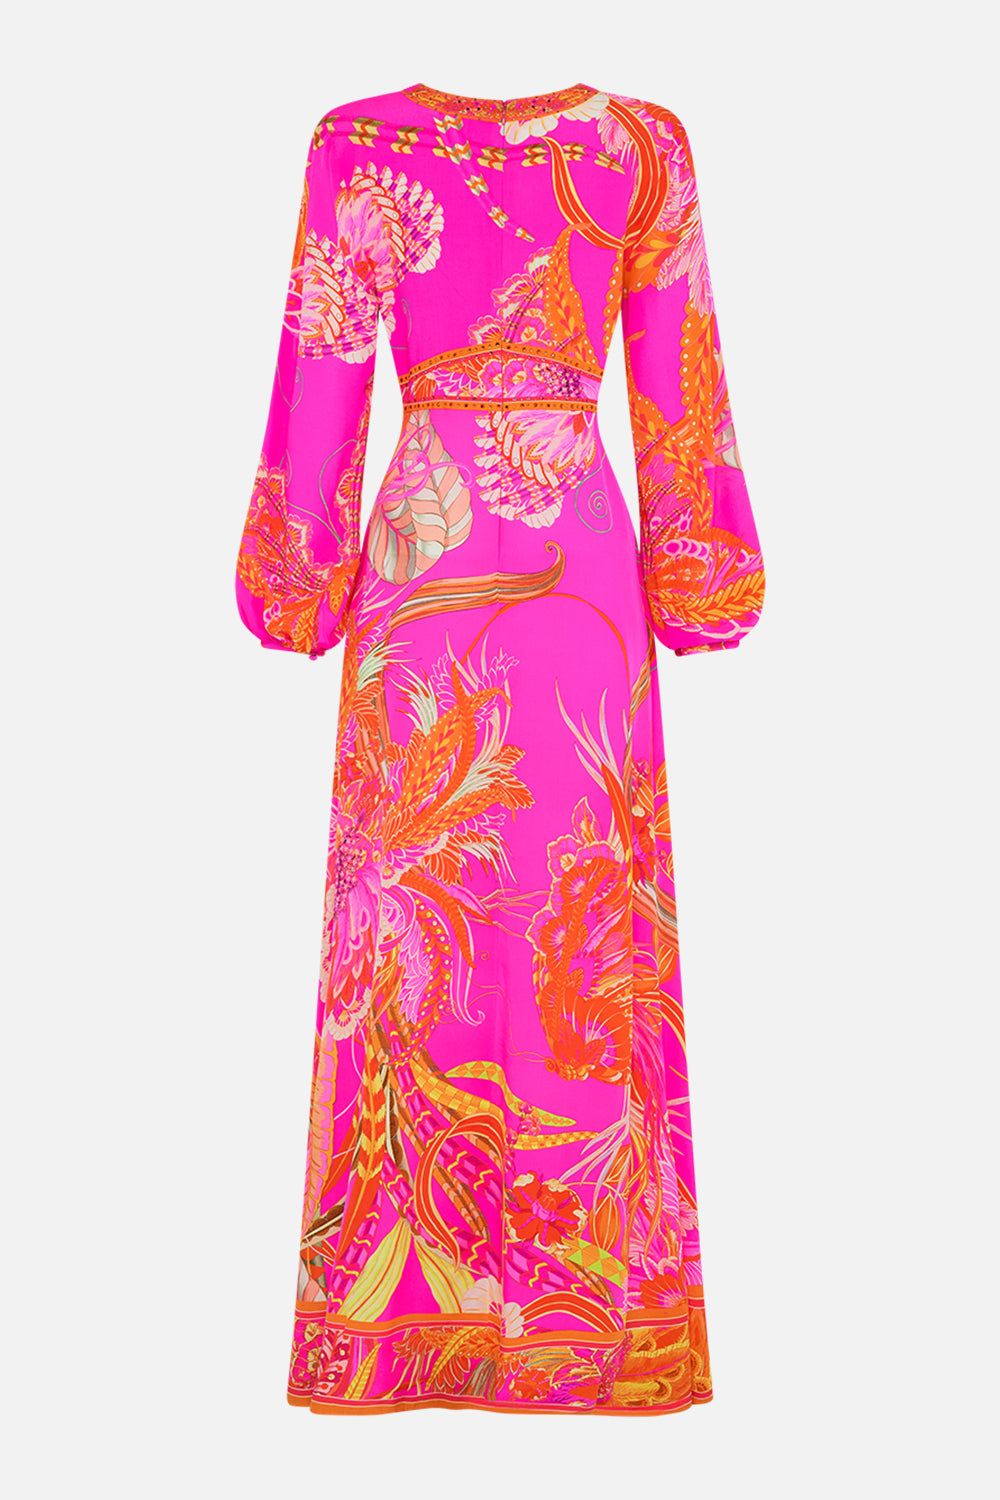 CAMILLA pink silk dress in A Heart That Flutters print